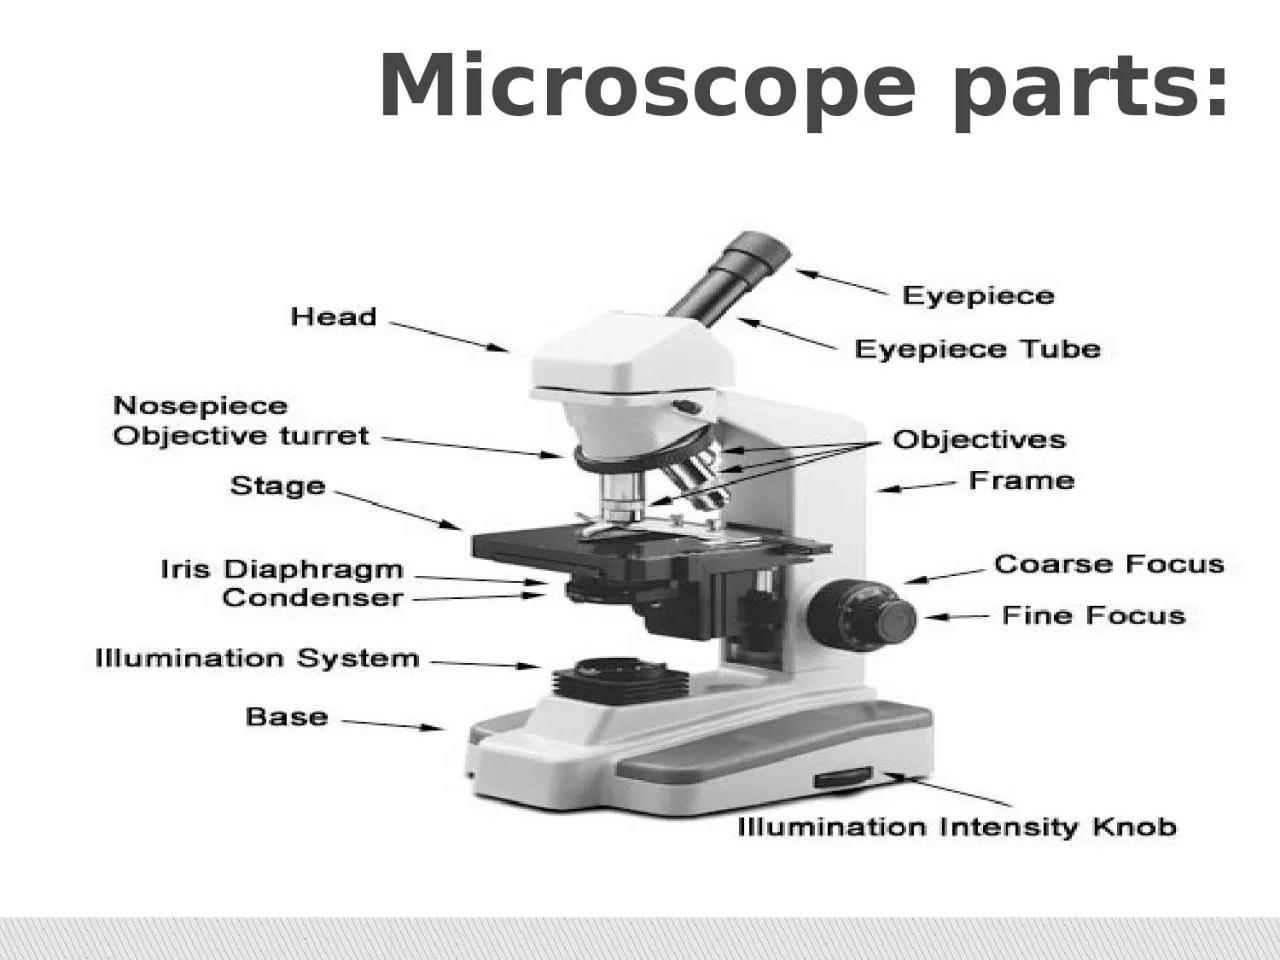 Microscope parts: Normal range: